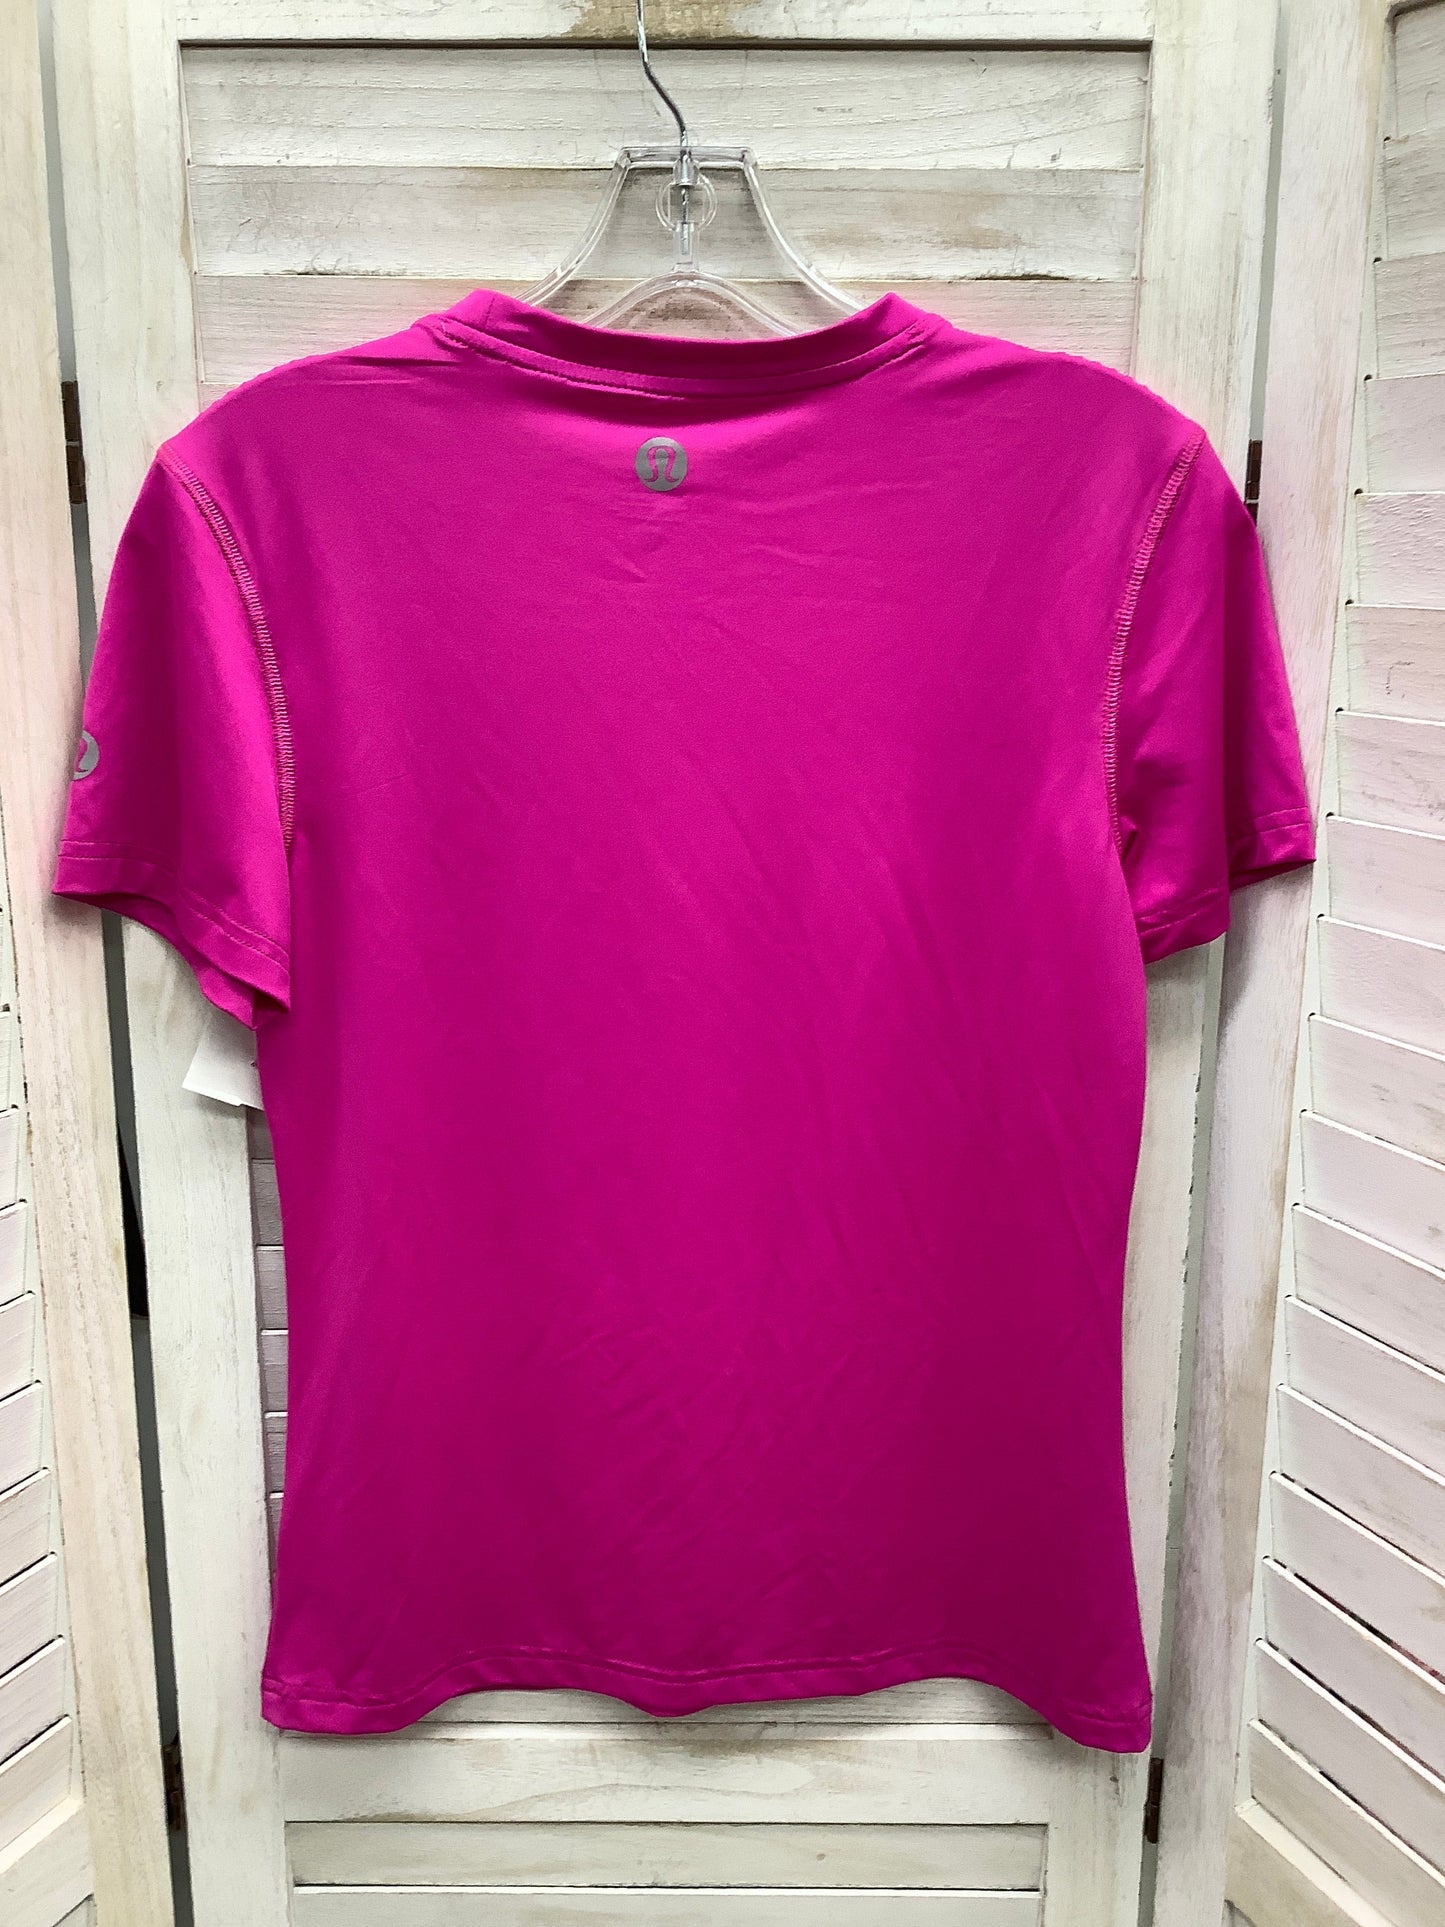 Pink Athletic Top Short Sleeve Lululemon, Size M